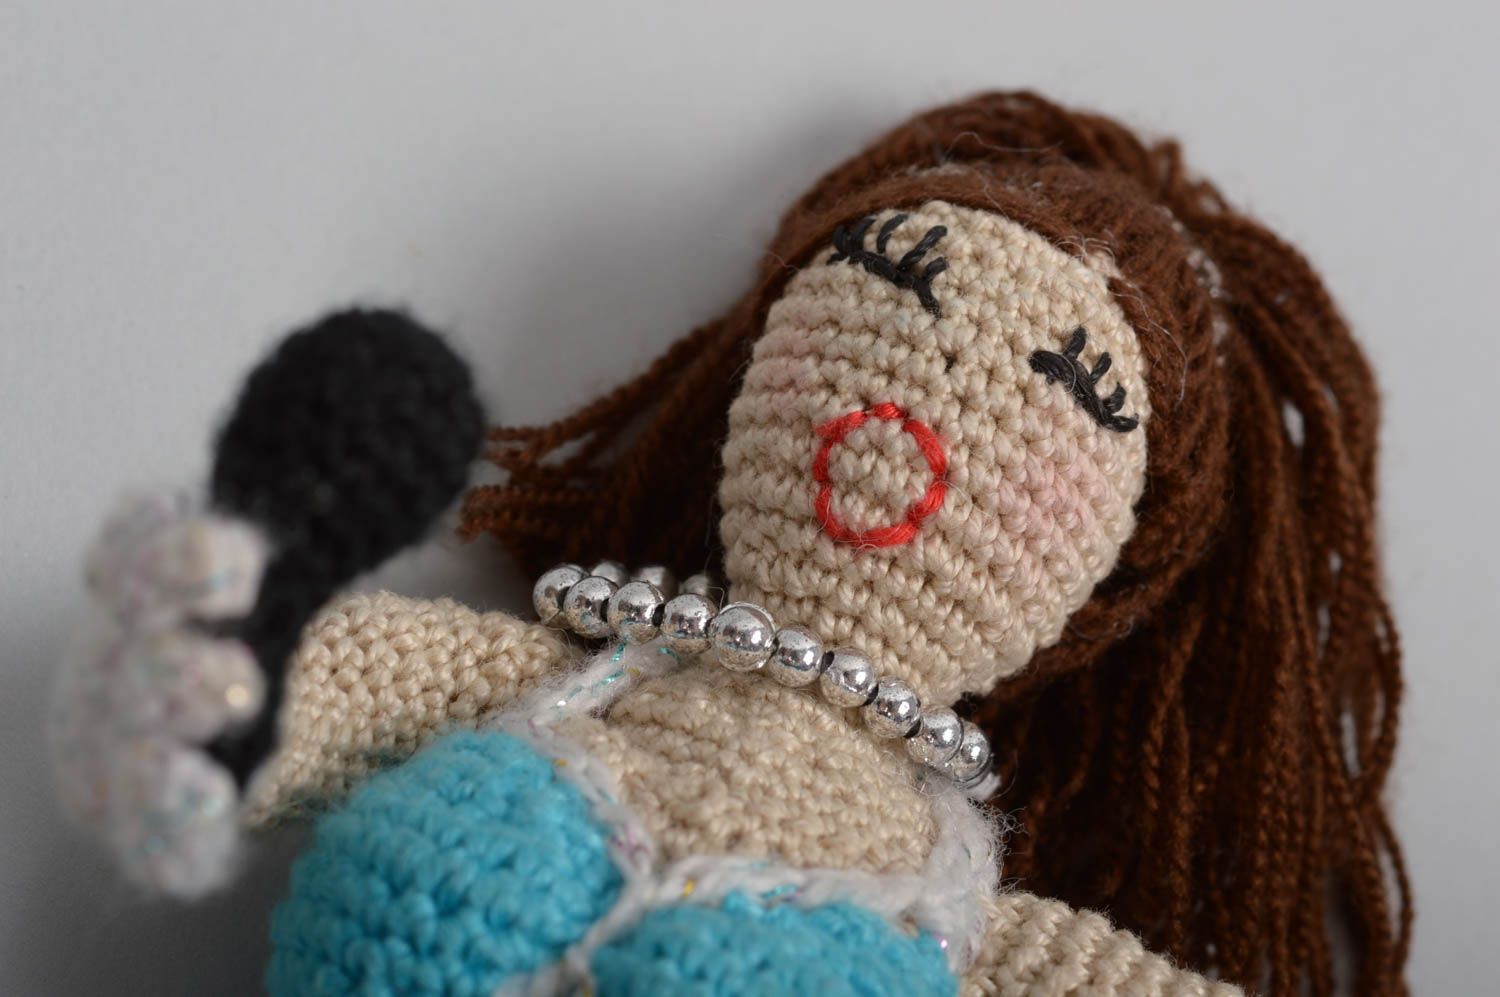 Beautiful handmade crochet toy soft doll stuffed toy room decor ideas gift ideas photo 3